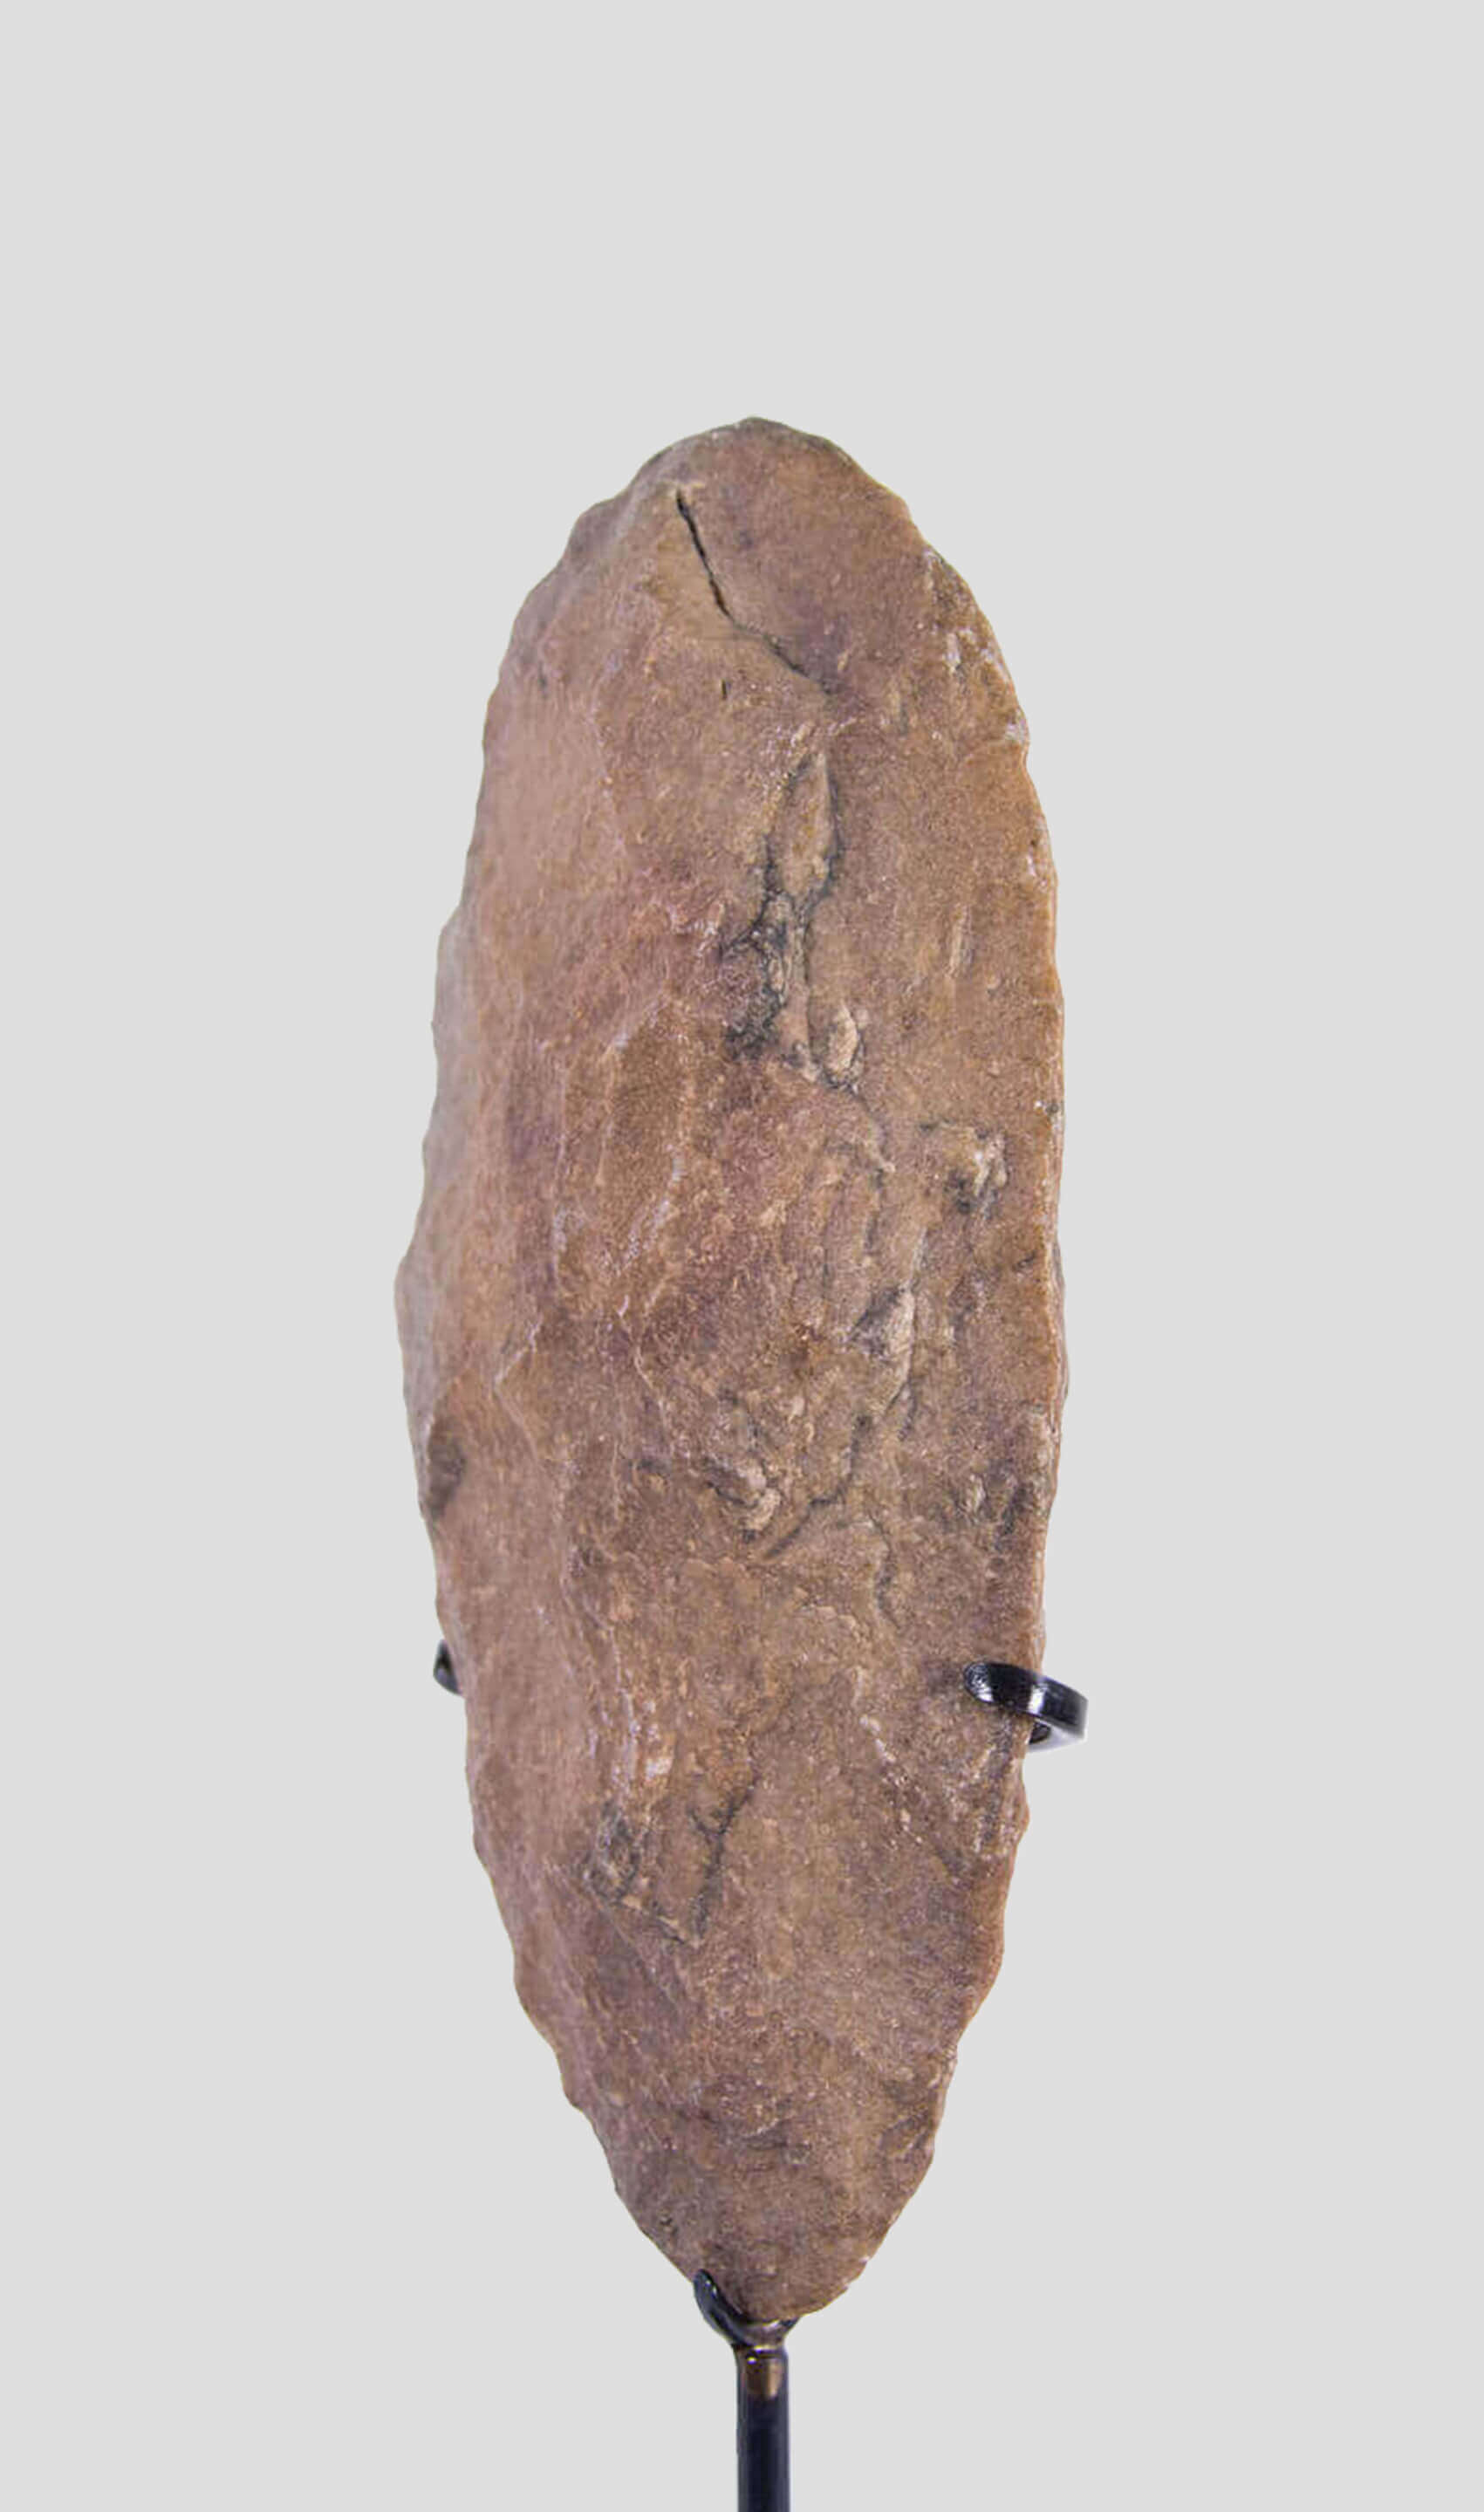 A stunning hand axe artefact for sale in a peach tone colour